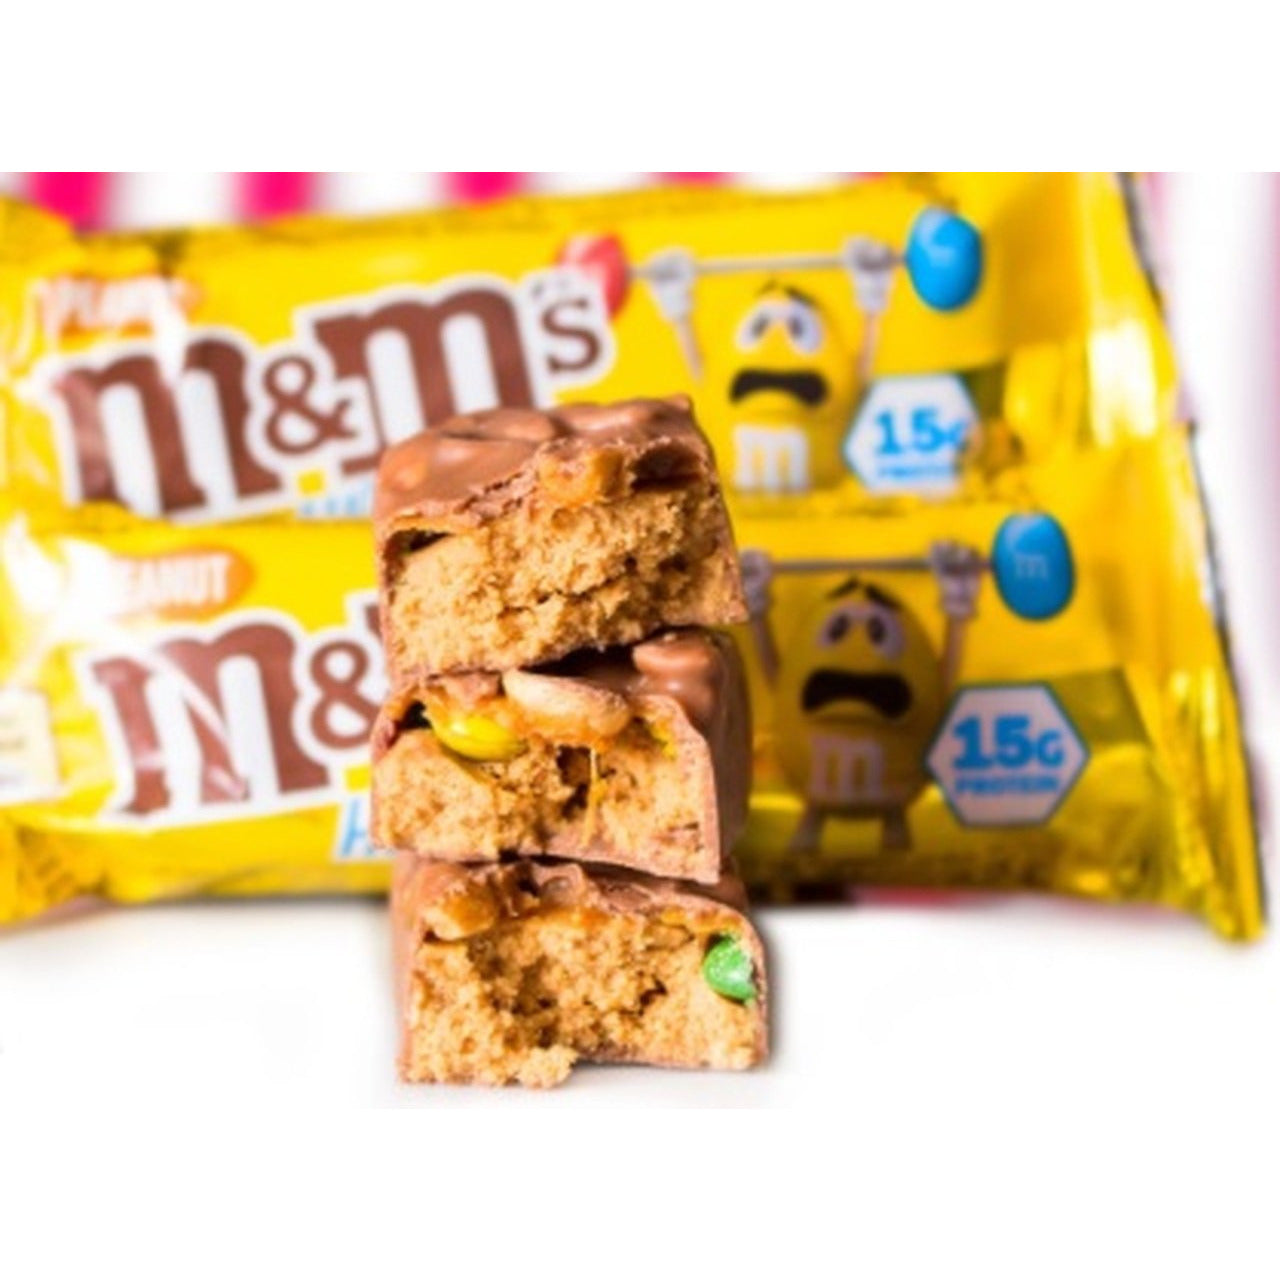 M&M's High Protein Chocolate 51g • Snackje